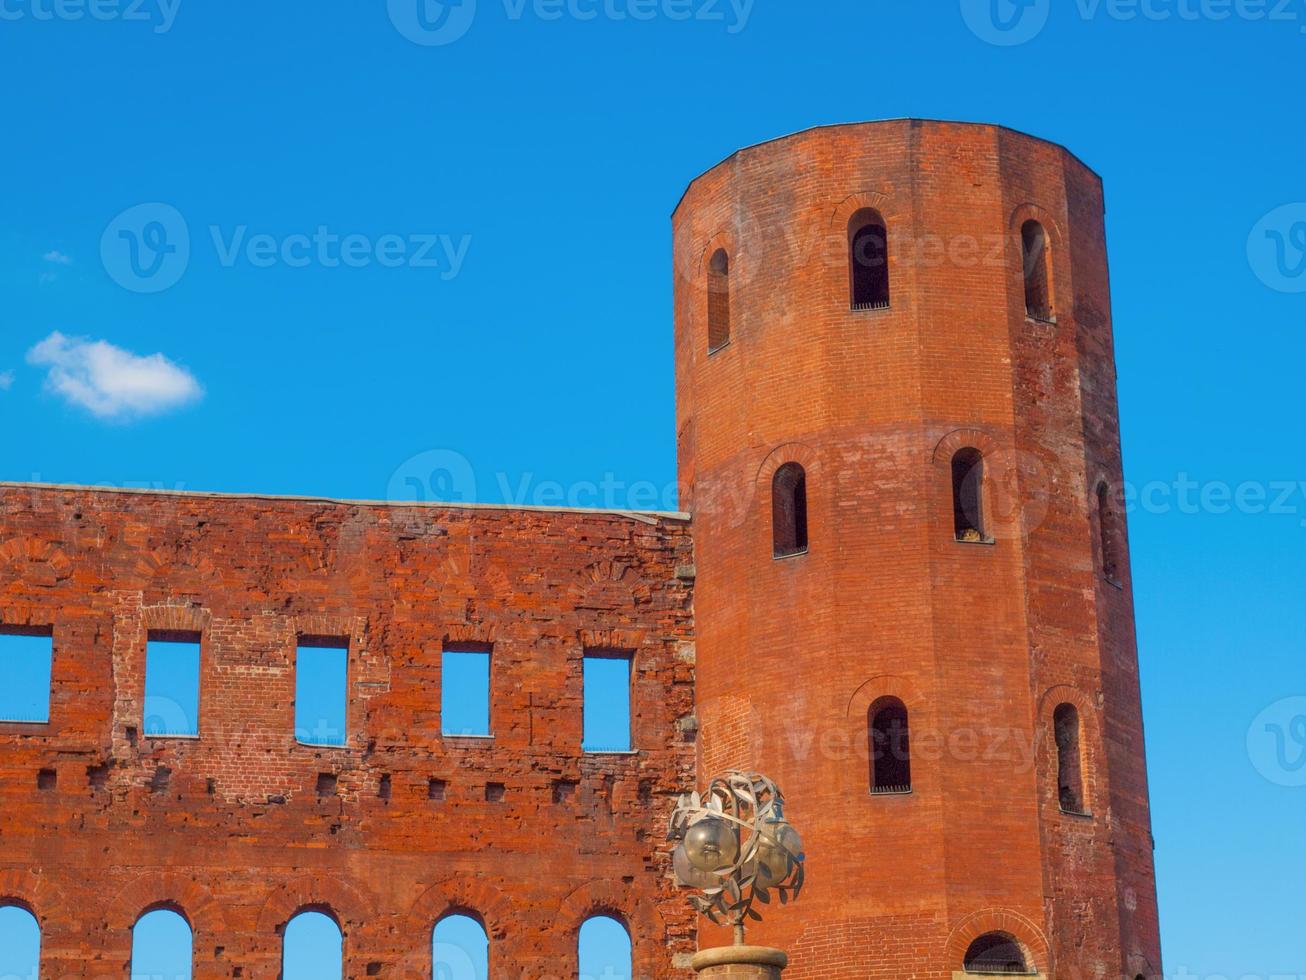 palatijnse torens, oude romeinse stadspoorten in turijn, italië foto